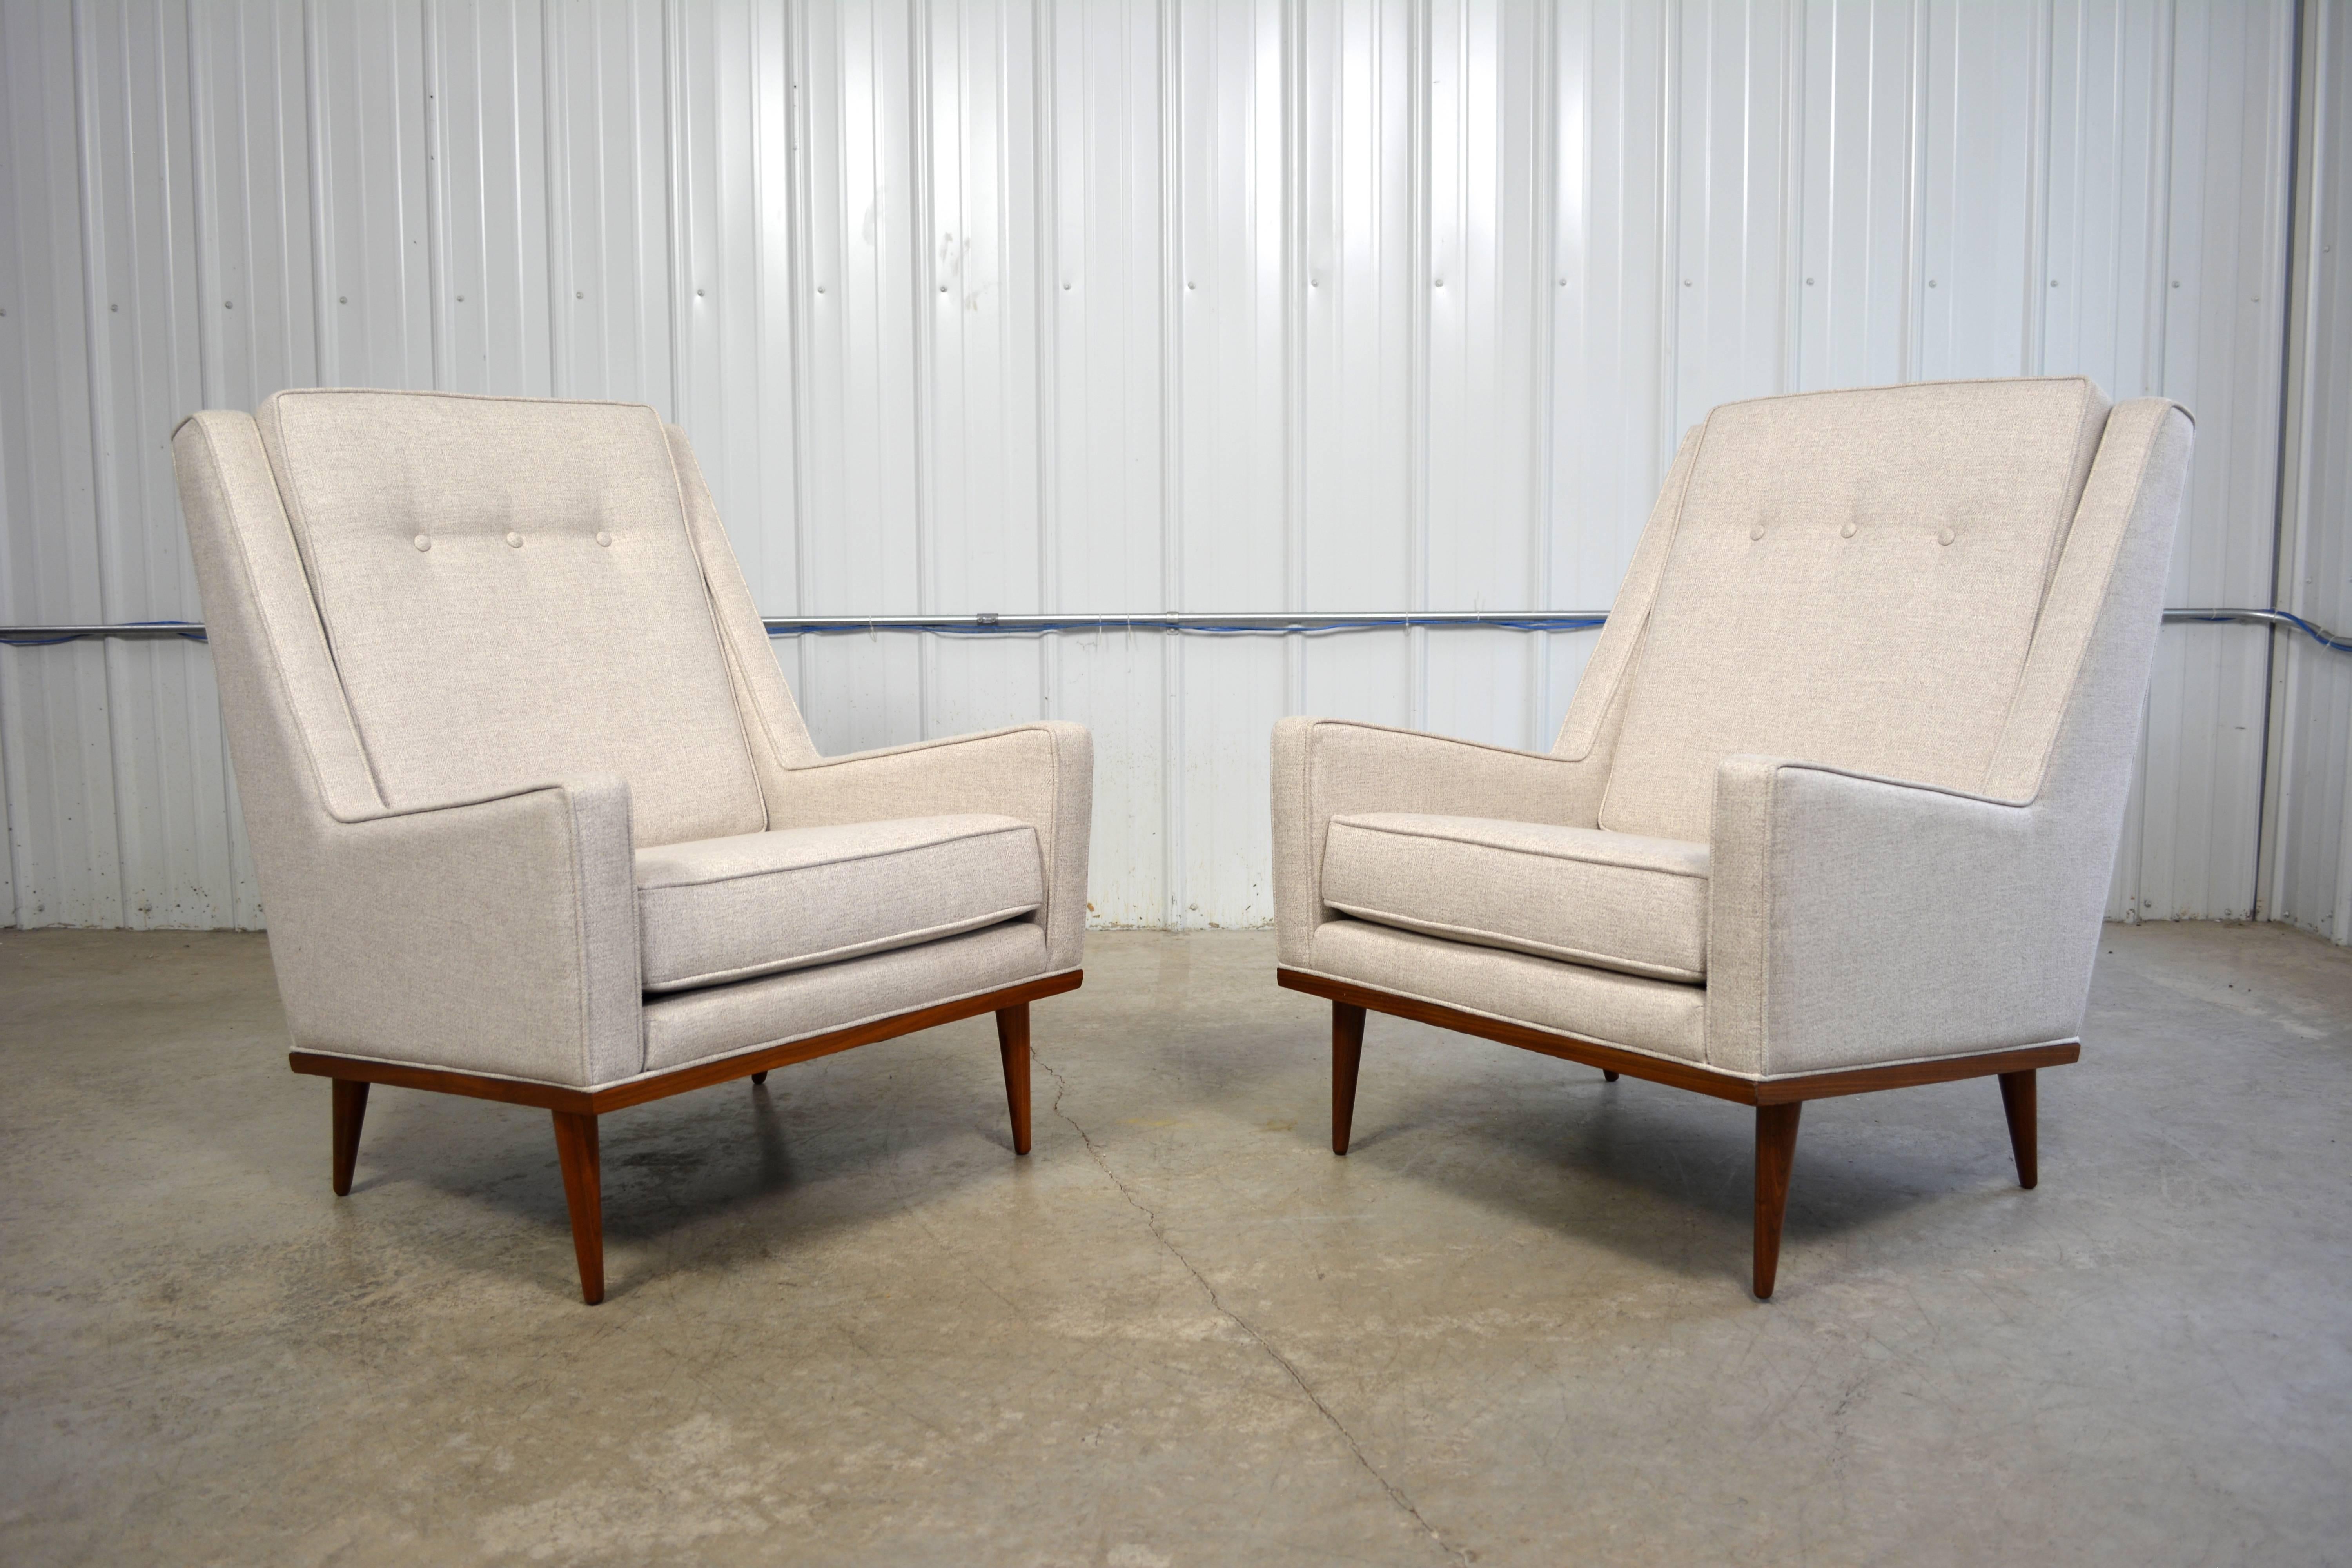 American Milo Baughman Lounge Chairs and Ottoman for James Inc.